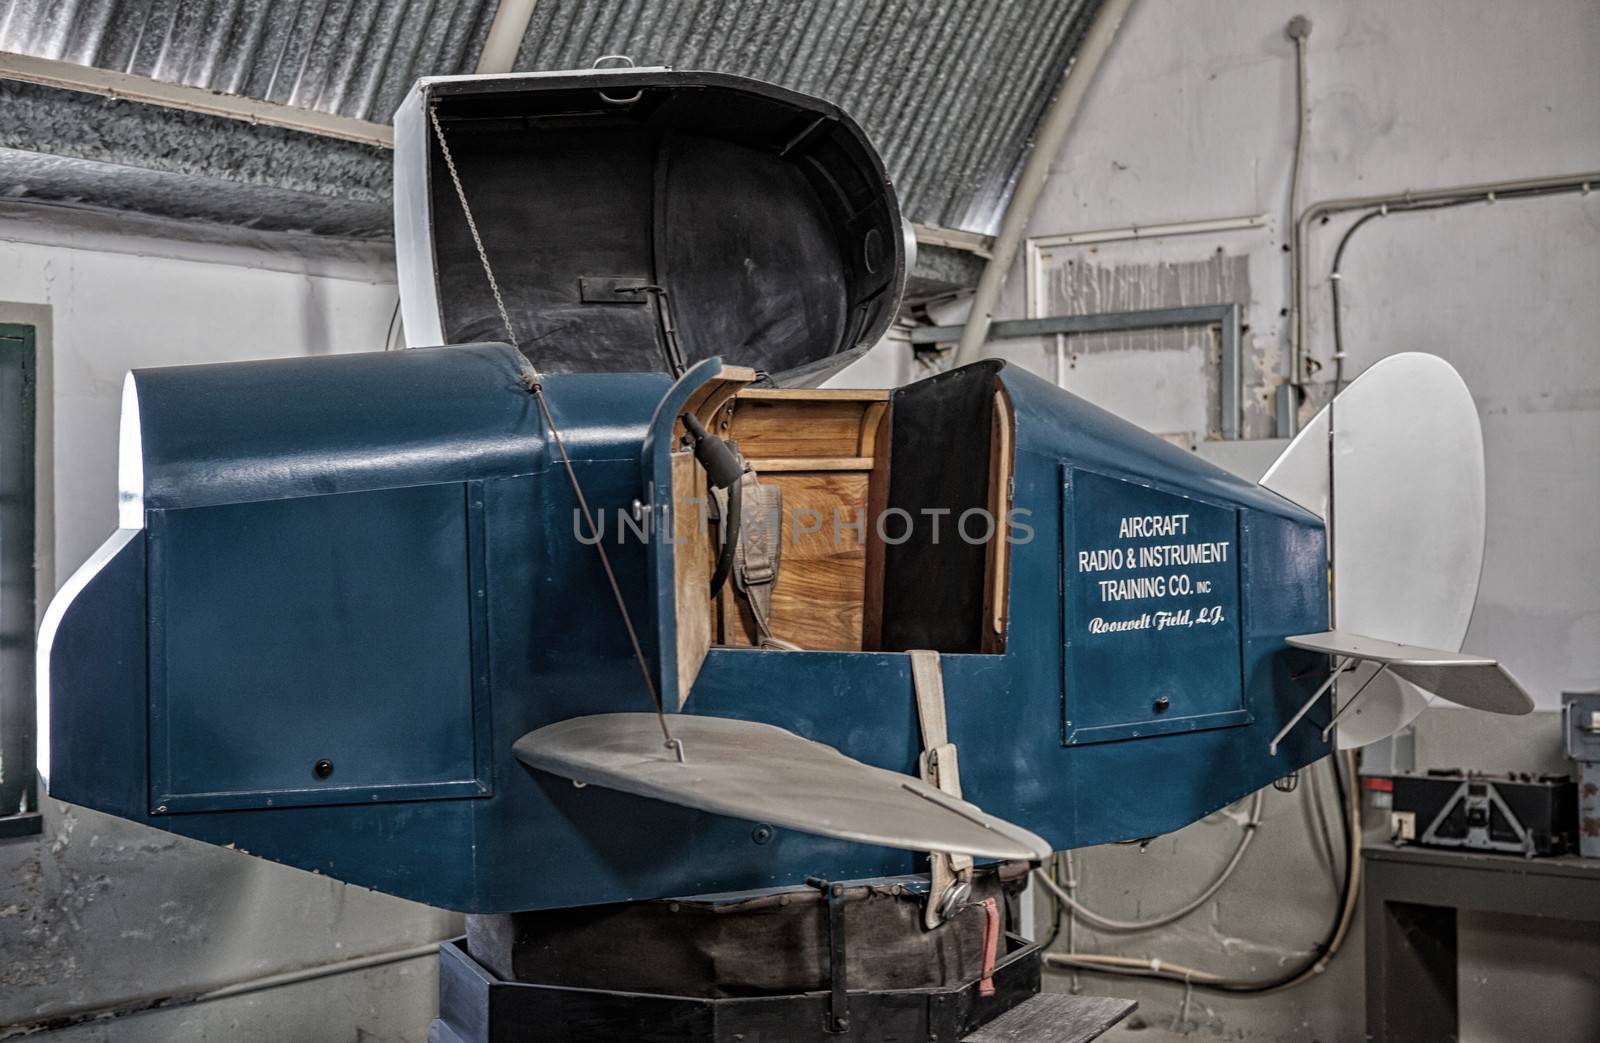 WWII Flight Simulator by PhotoWorks